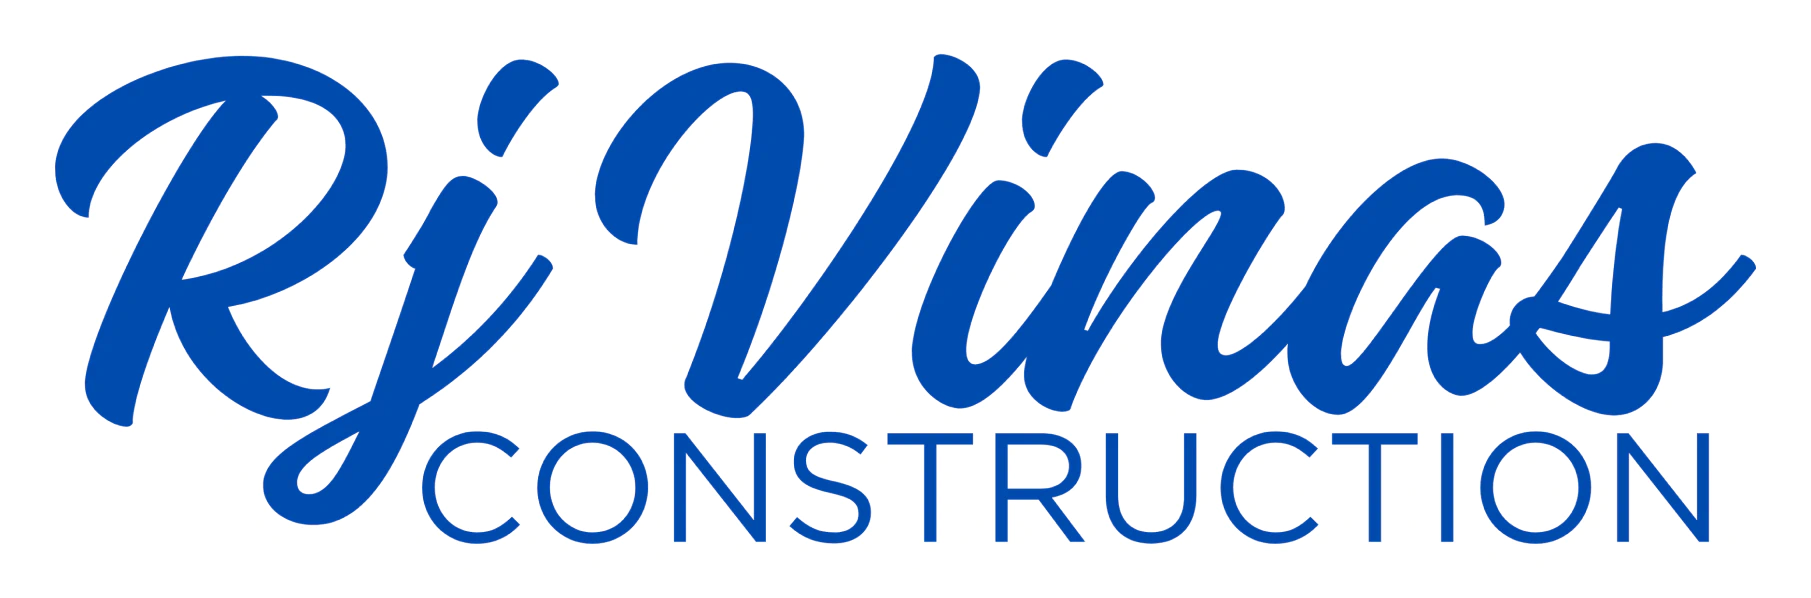 rj vinas construction placeholder logo 1